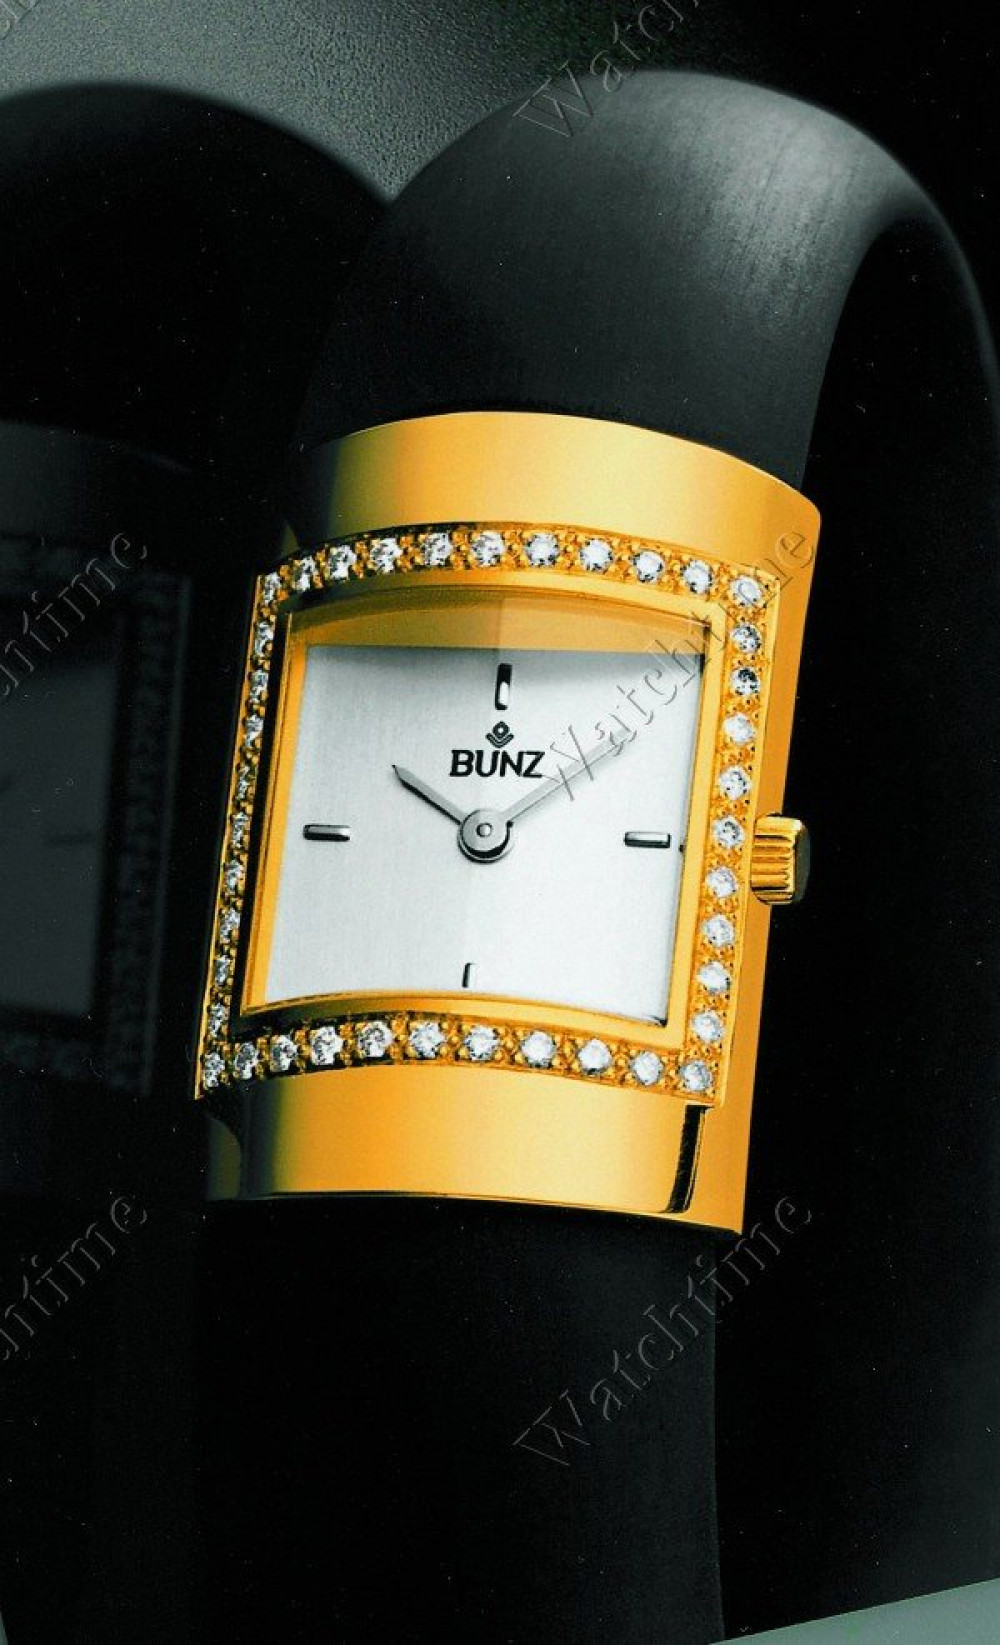 Zegarek firmy Bunz, model Damenuhr